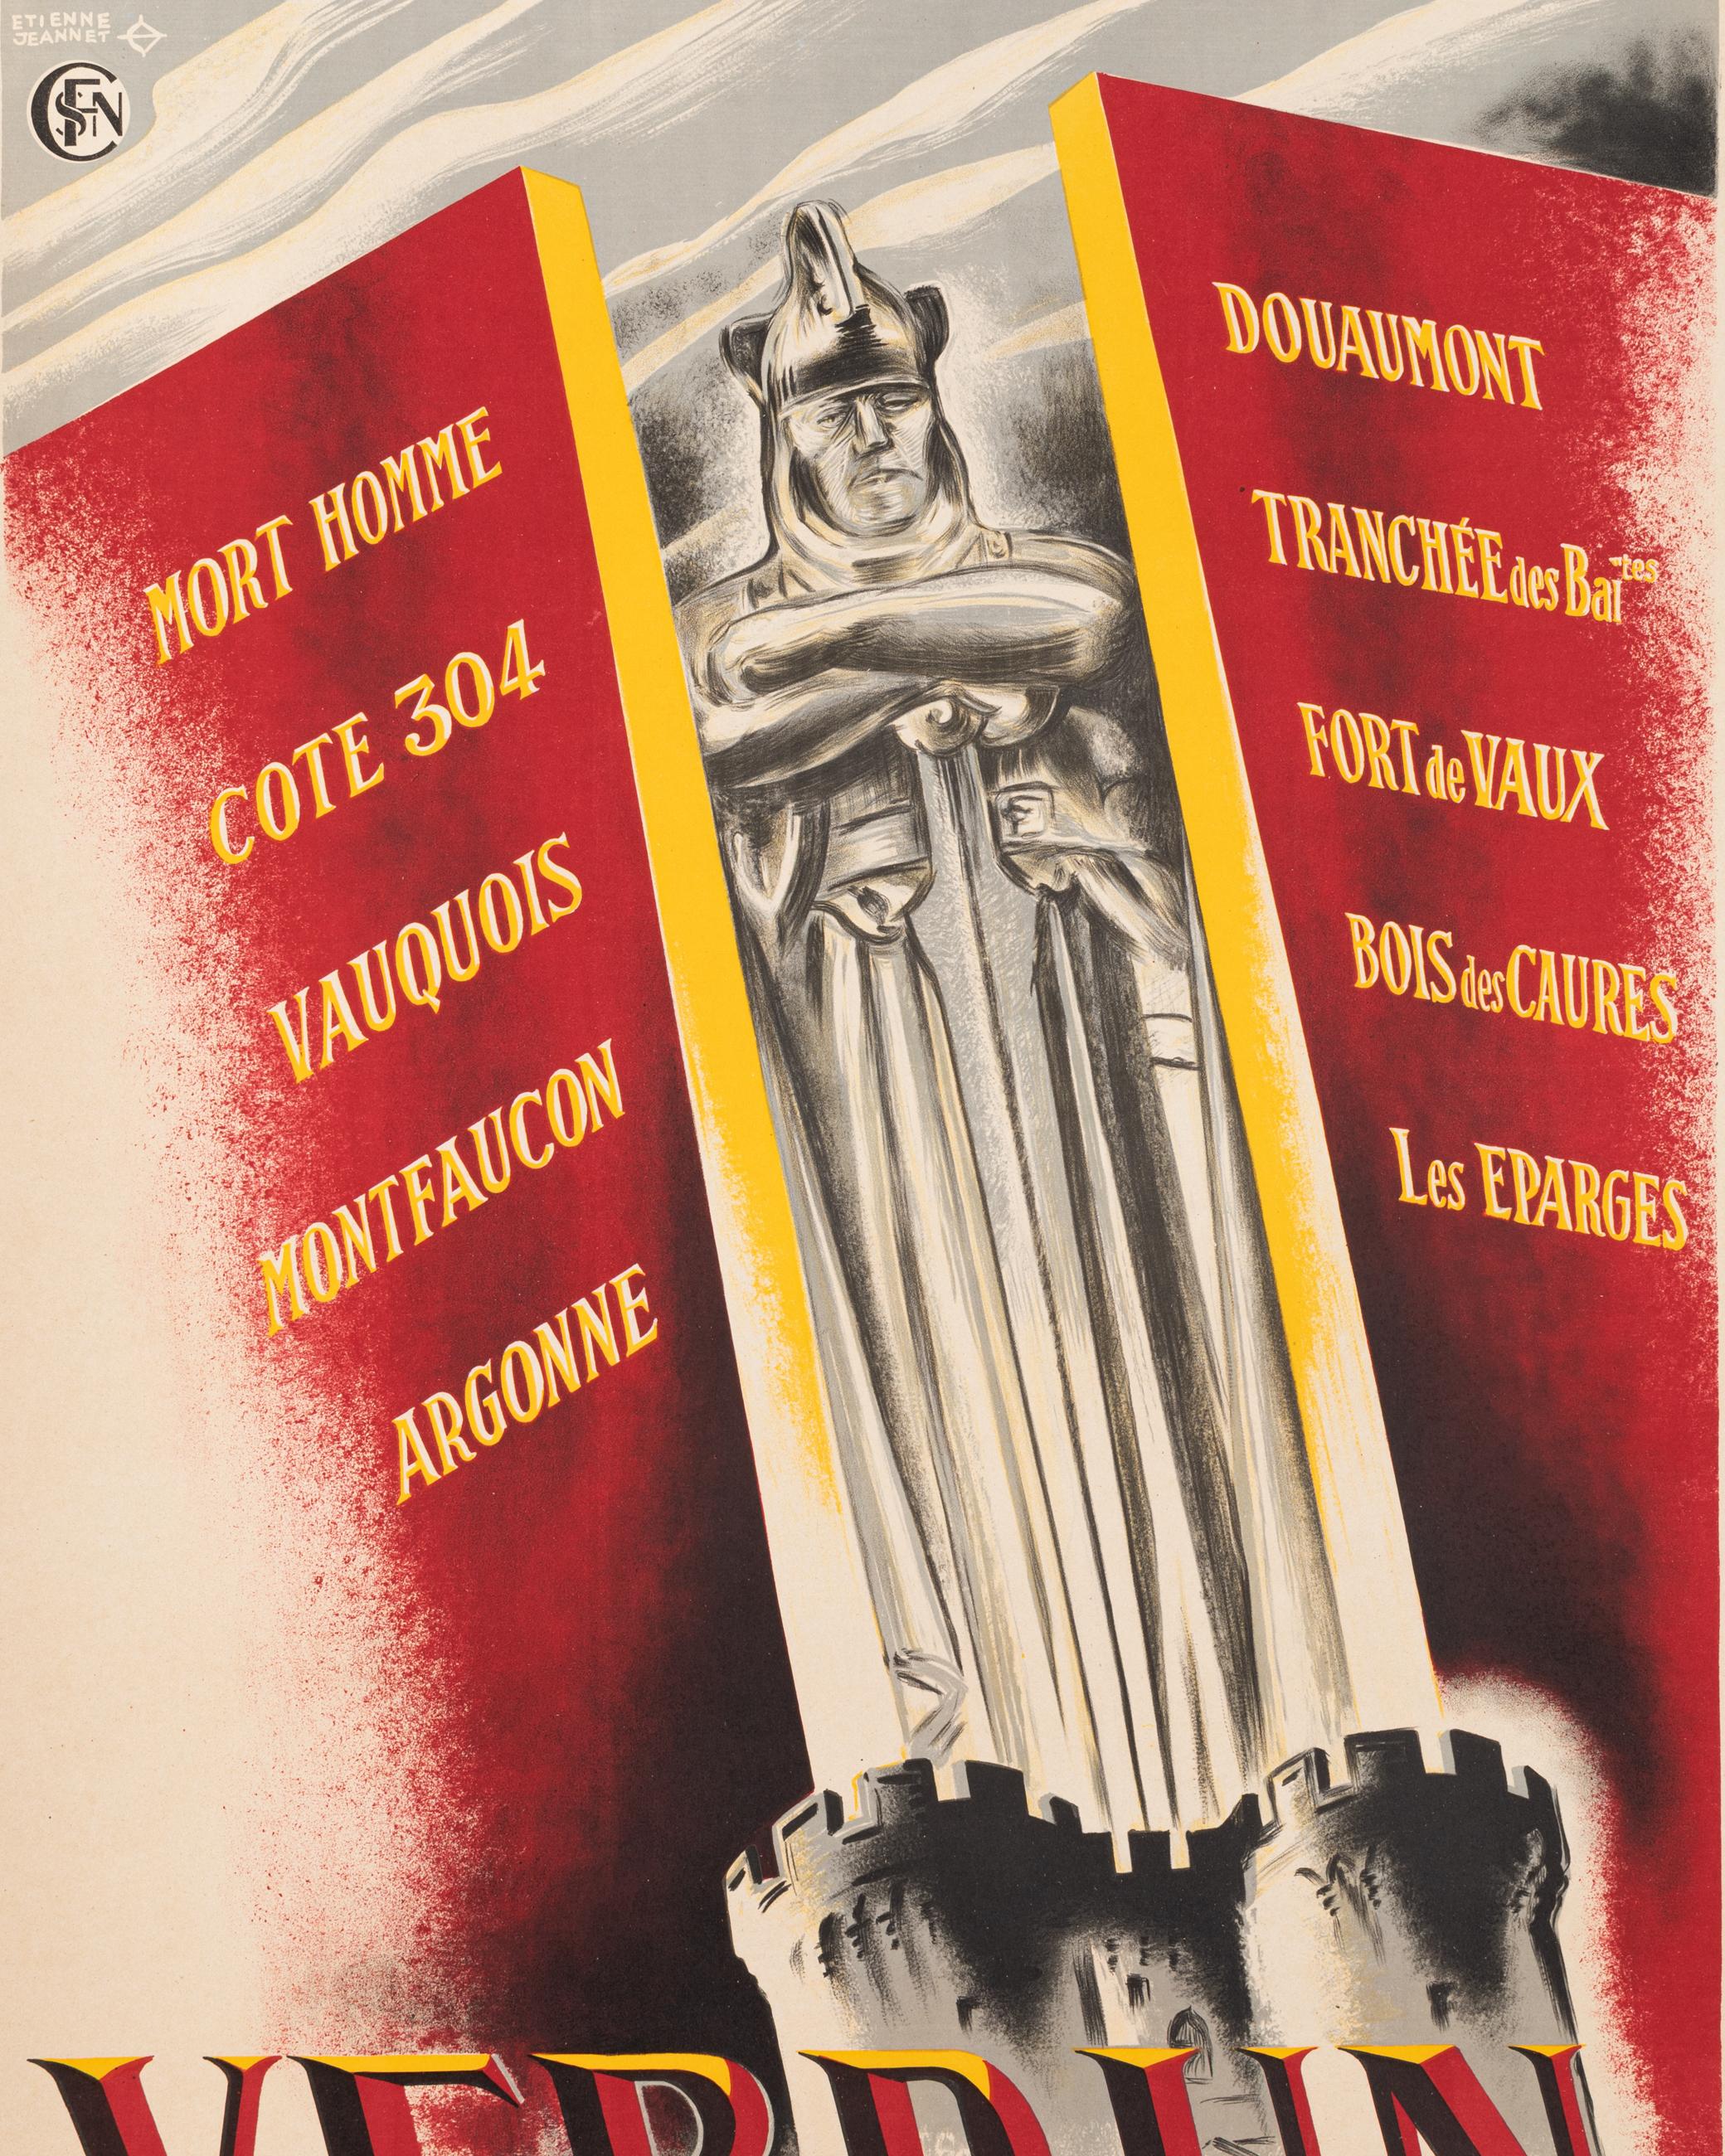 Original Vintage Poster for the French Railways about Verdun created by Etienne Jeannet in 1930.

Artist: Jeannet Etienne
Title: Verdun – Forteresse historique – Centre de Tourisme
Date: circa 1930
Size (w x h): 24.8 x 39.2 in / 63 x 99.5